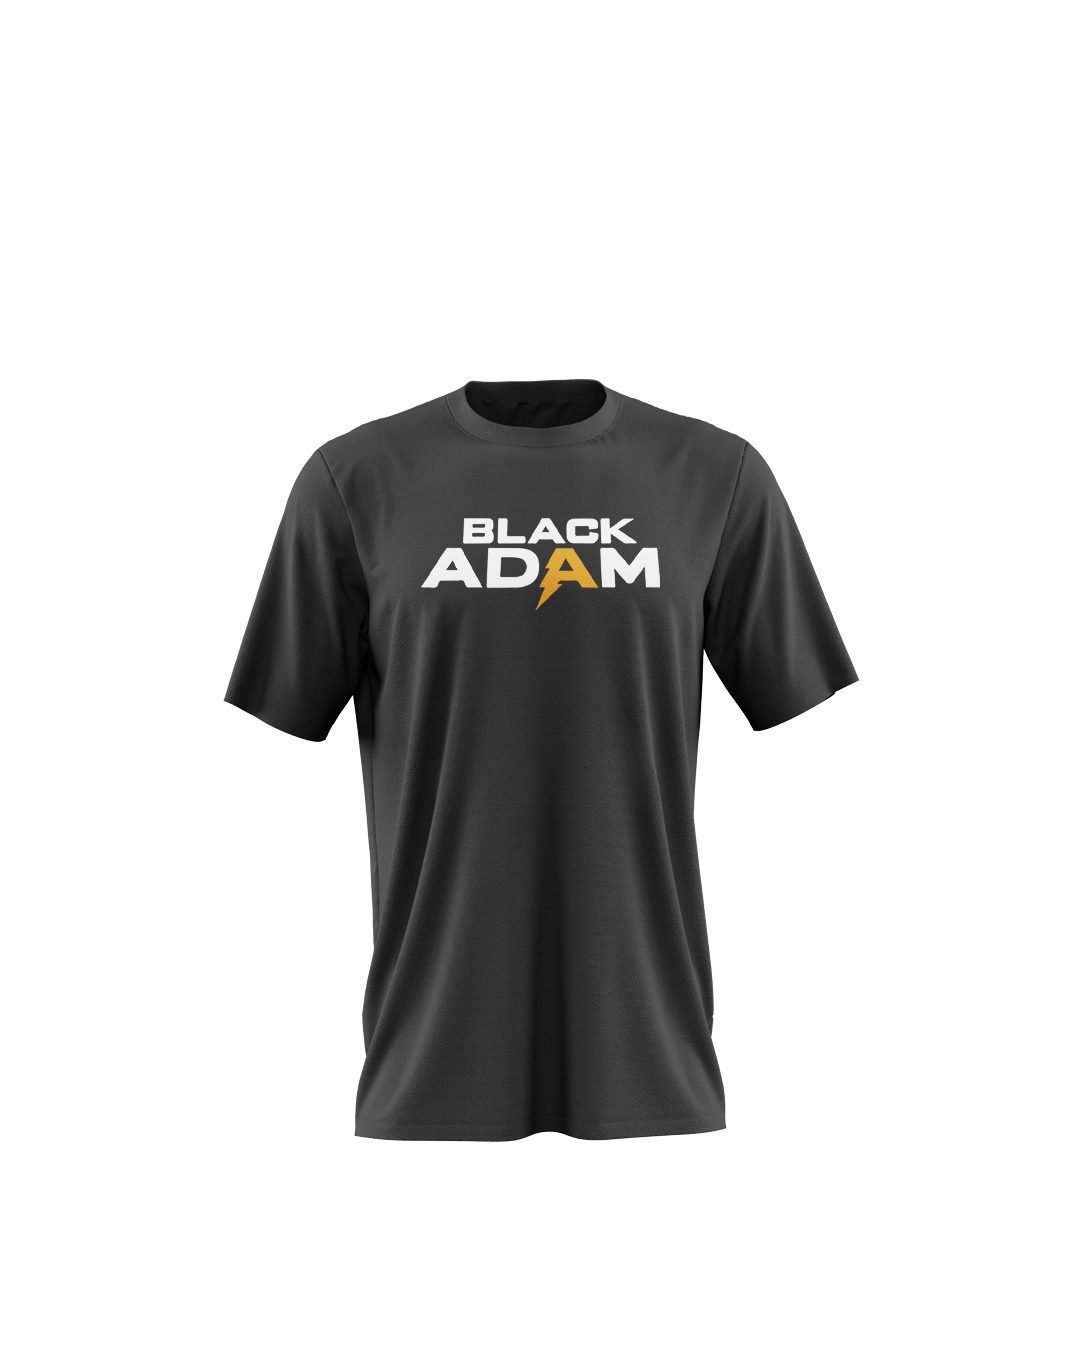 Black adam Printed T-Shirts for Men | Regular Cotton Round Neck T-Shirt | Kahndaq Mens and Boys T-Shirt